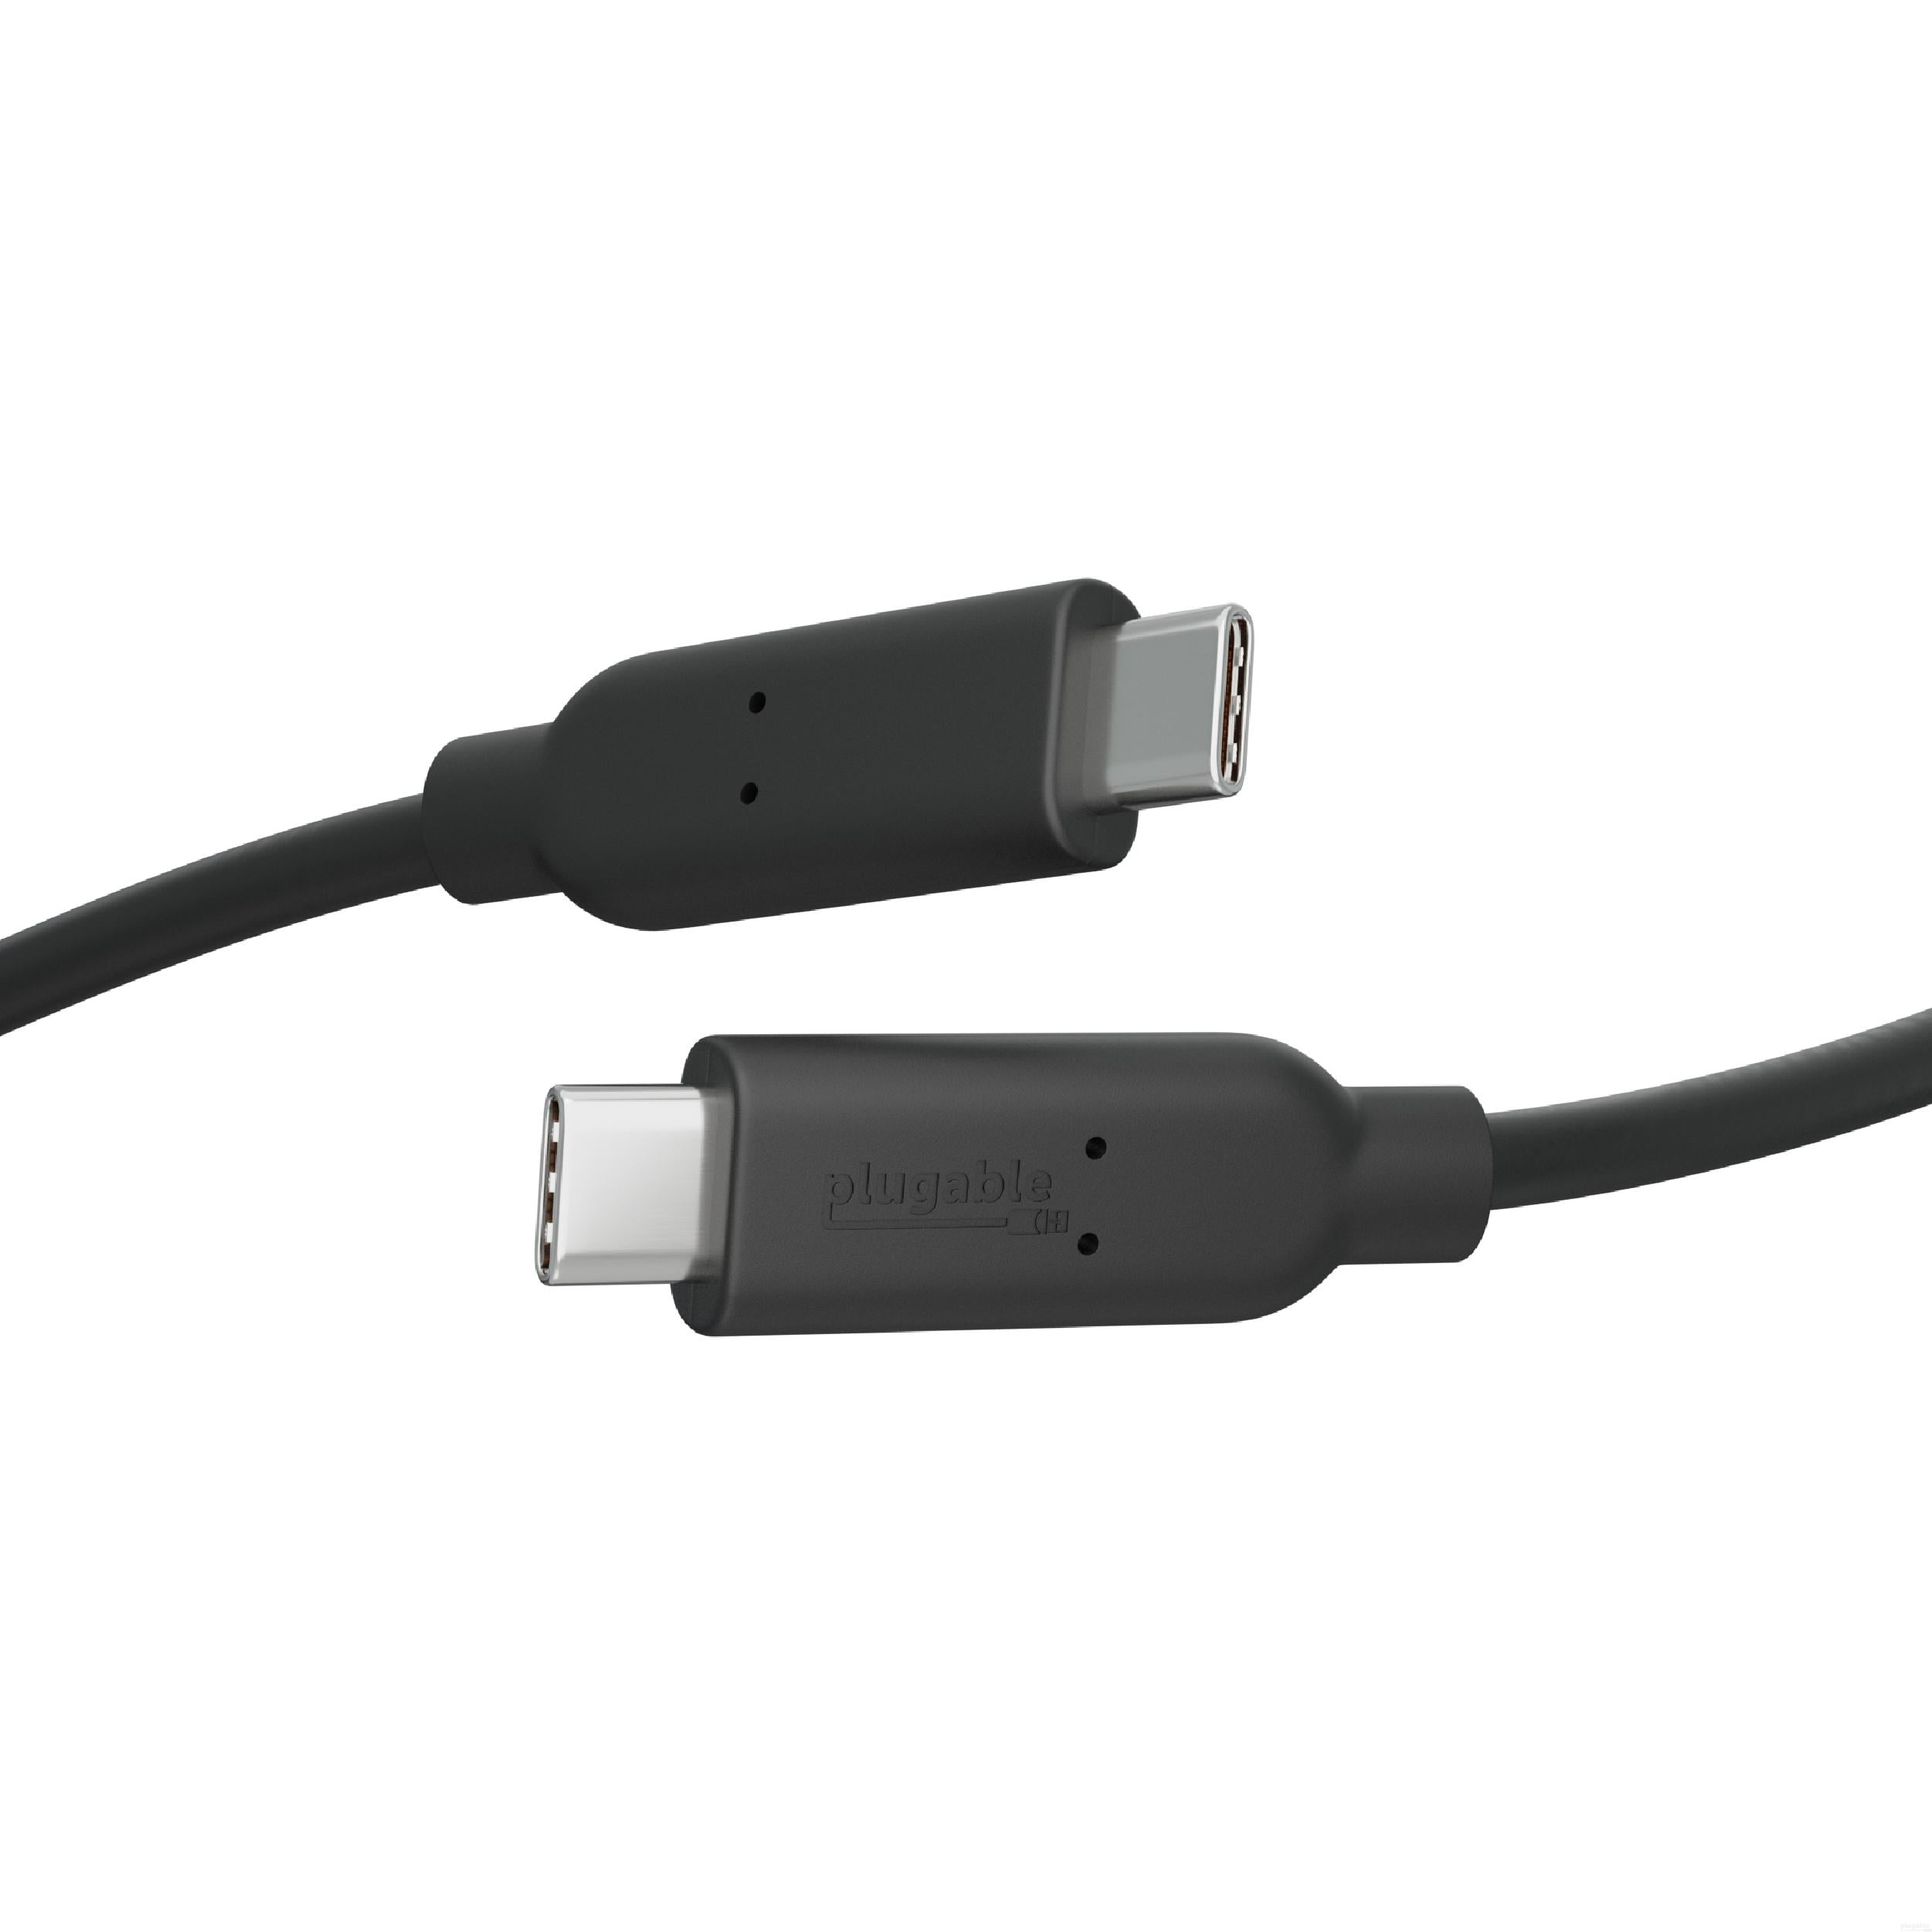 Câble USB-C 1,8m 5A, EP-DX510JBEGEU